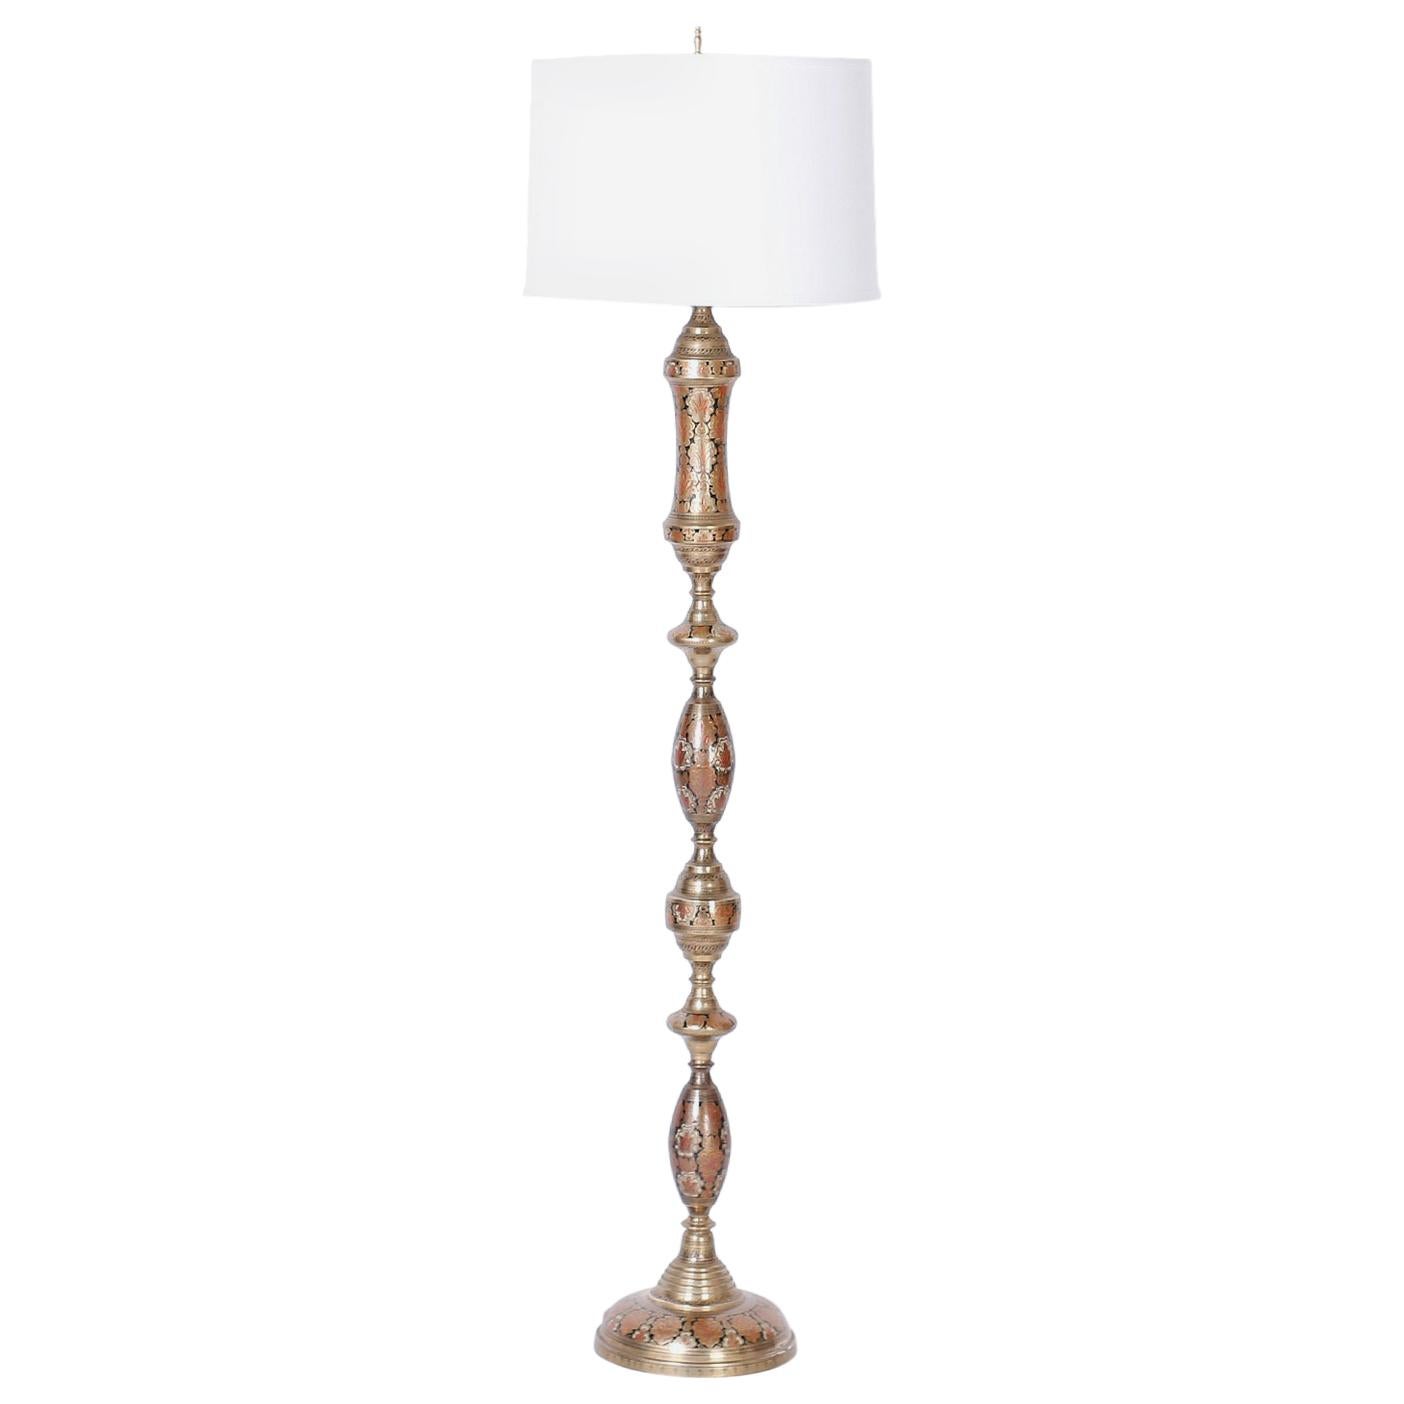 Brass and Enamel Floor Lamp